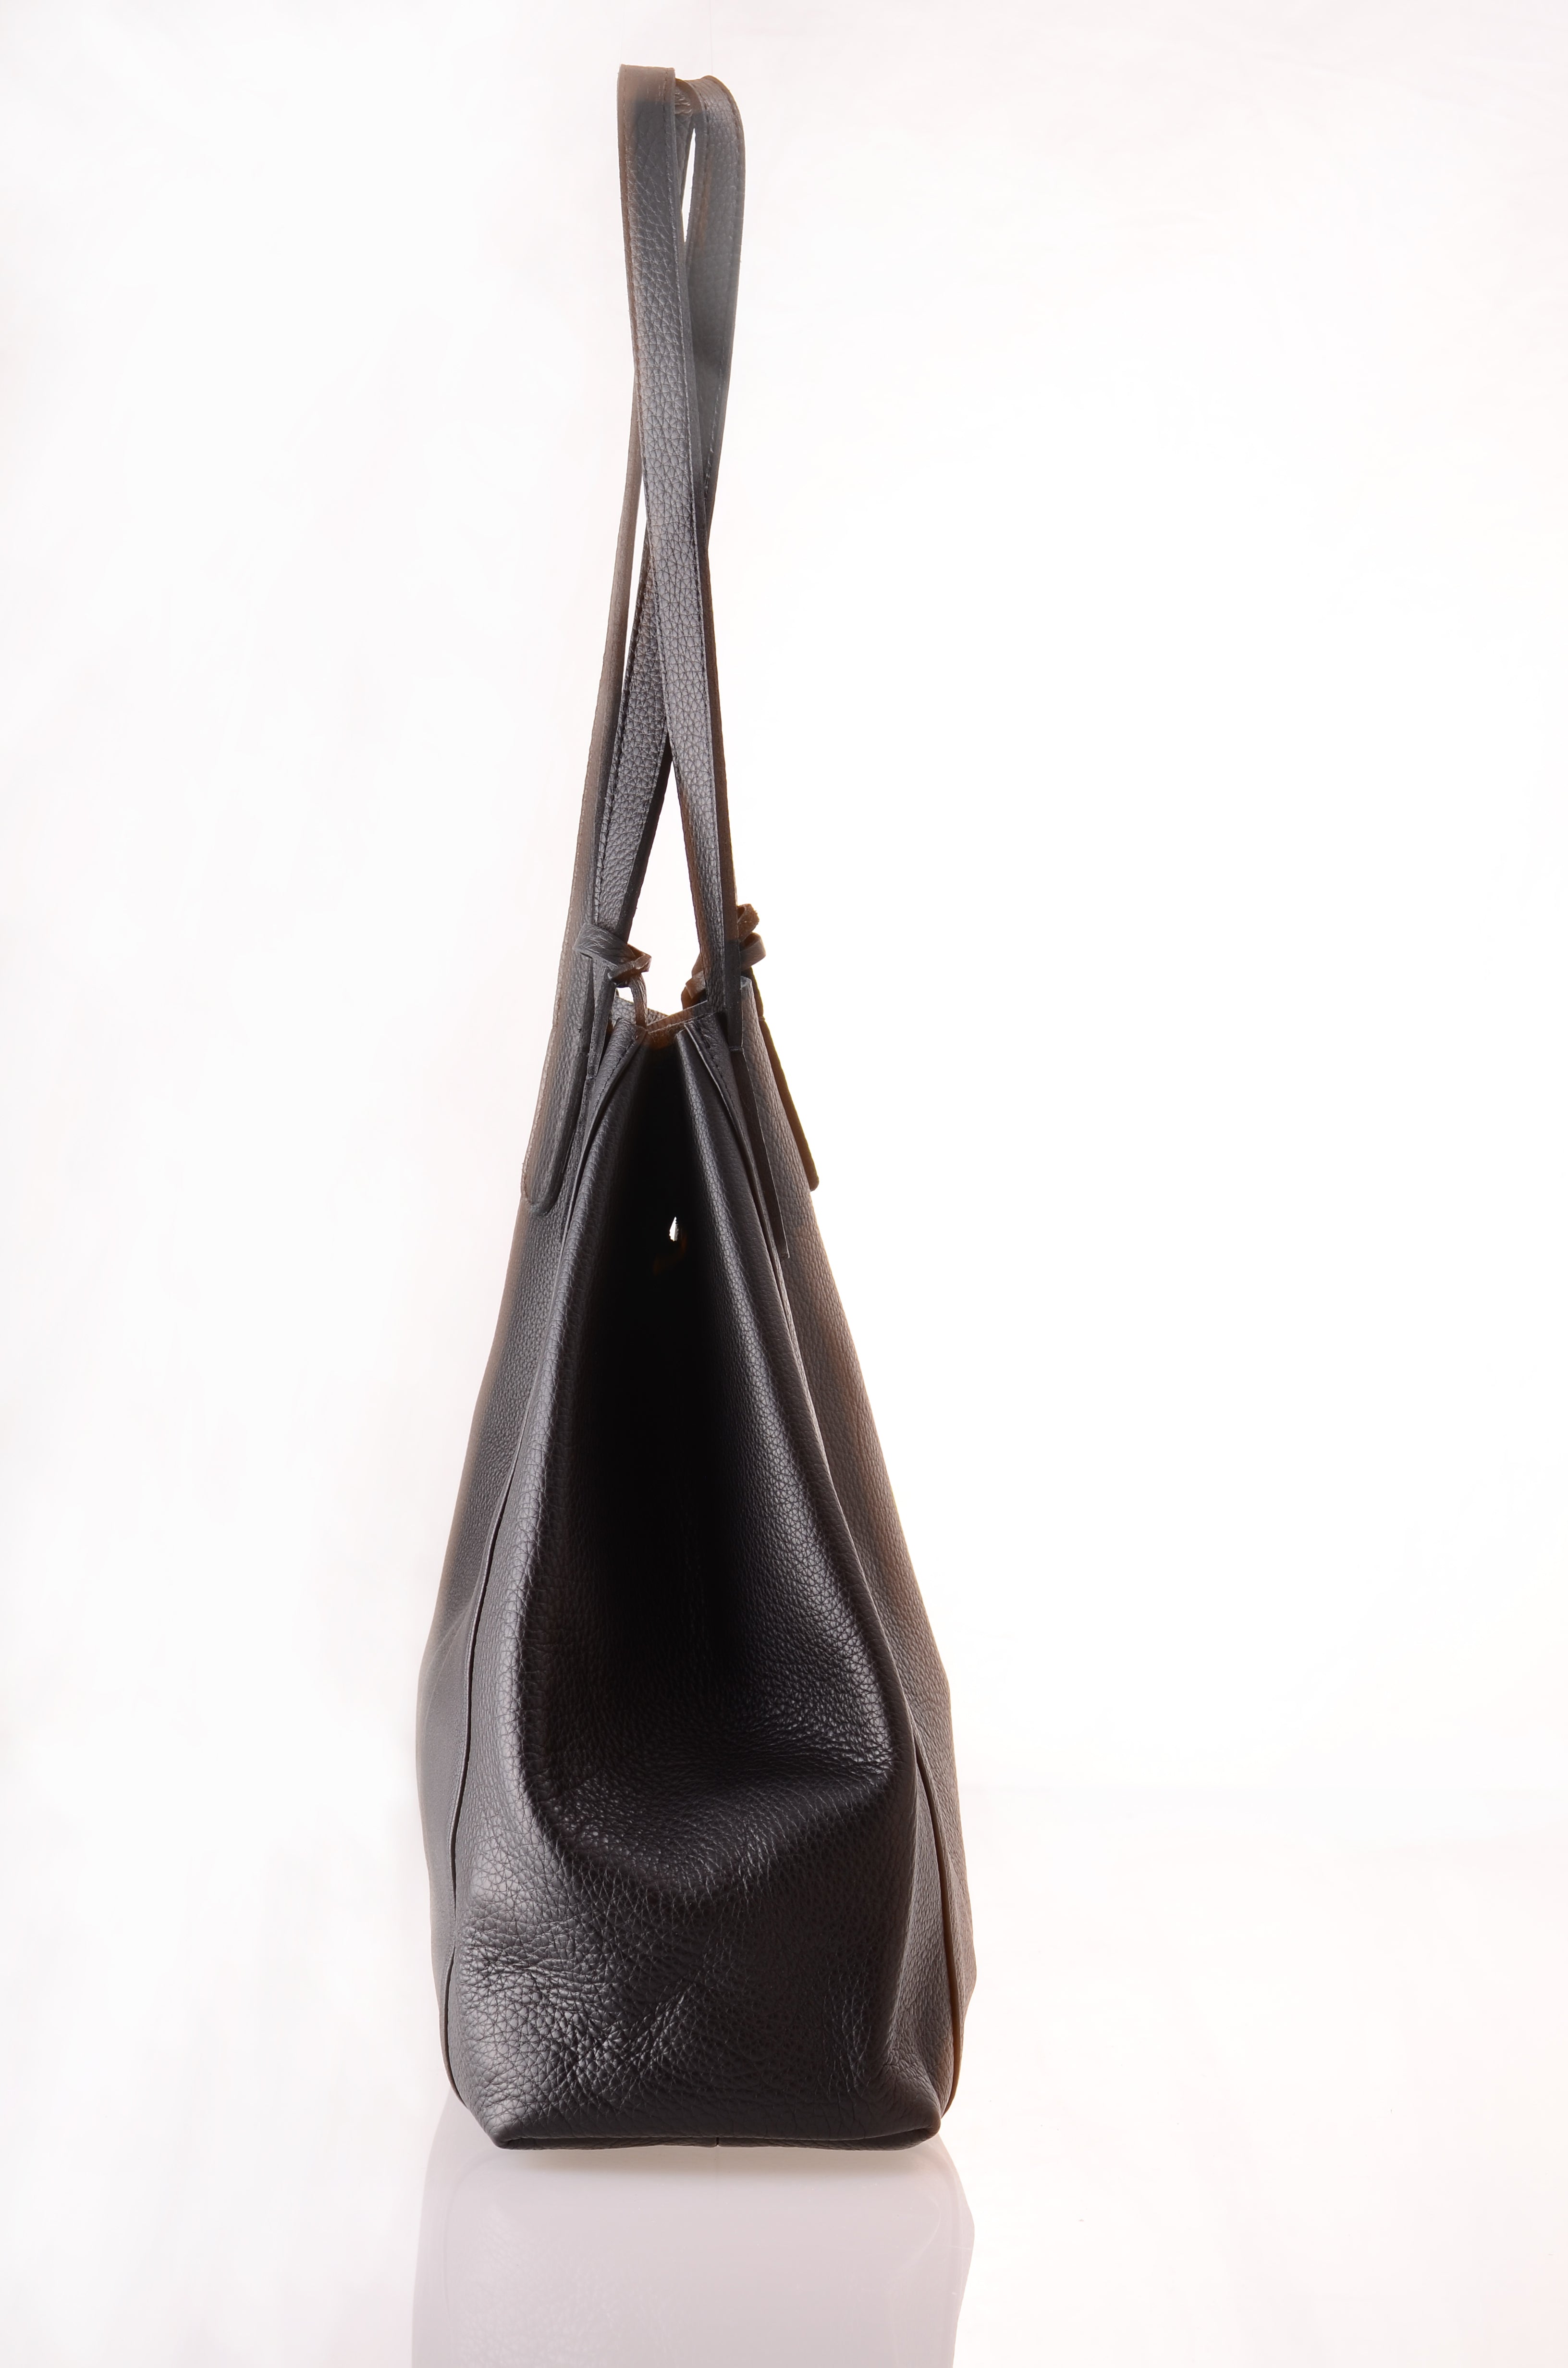 KYLA JOY Tote Bag – Handbag Tailor